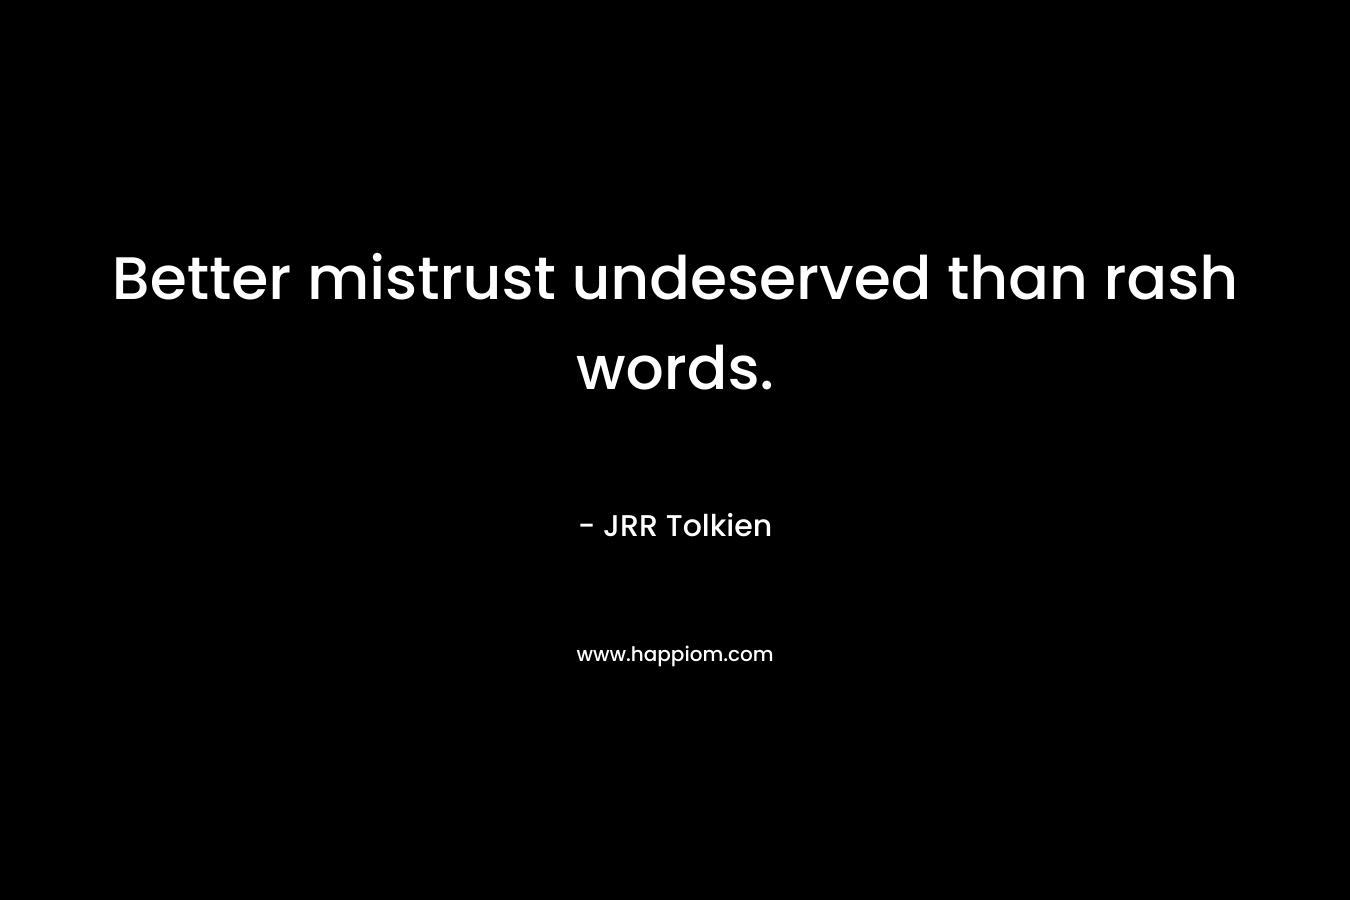 Better mistrust undeserved than rash words. – JRR Tolkien